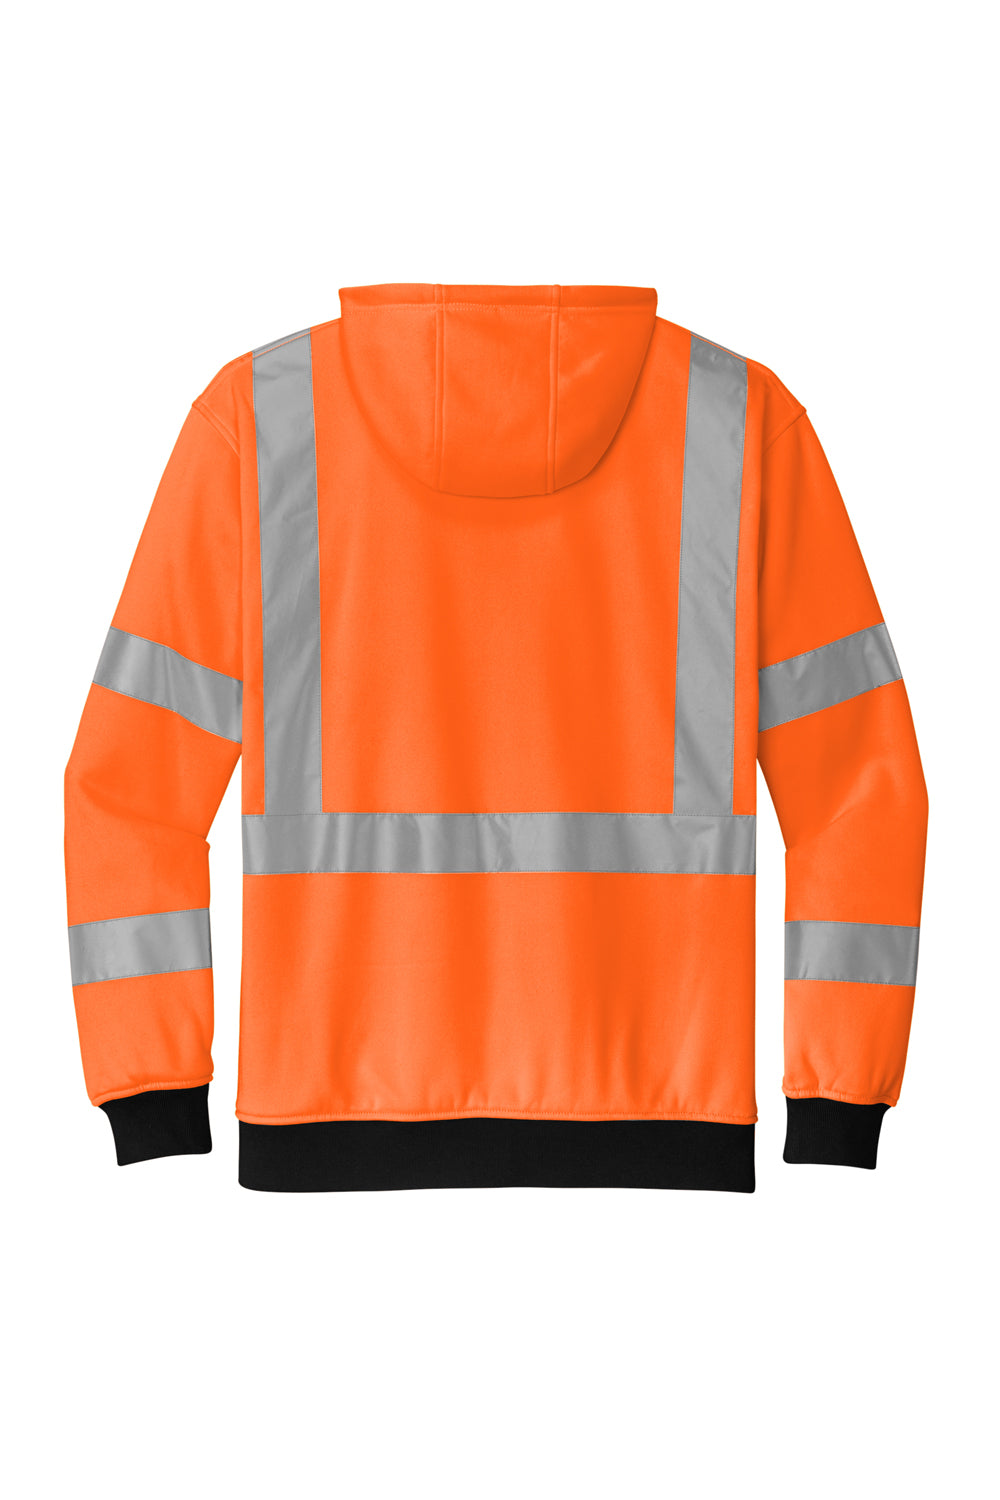 CornerStone CSF300 Enhanced Visibility Fleece Full Zip Hooded Sweatshirt Hoodie Safety Orange Flat Back